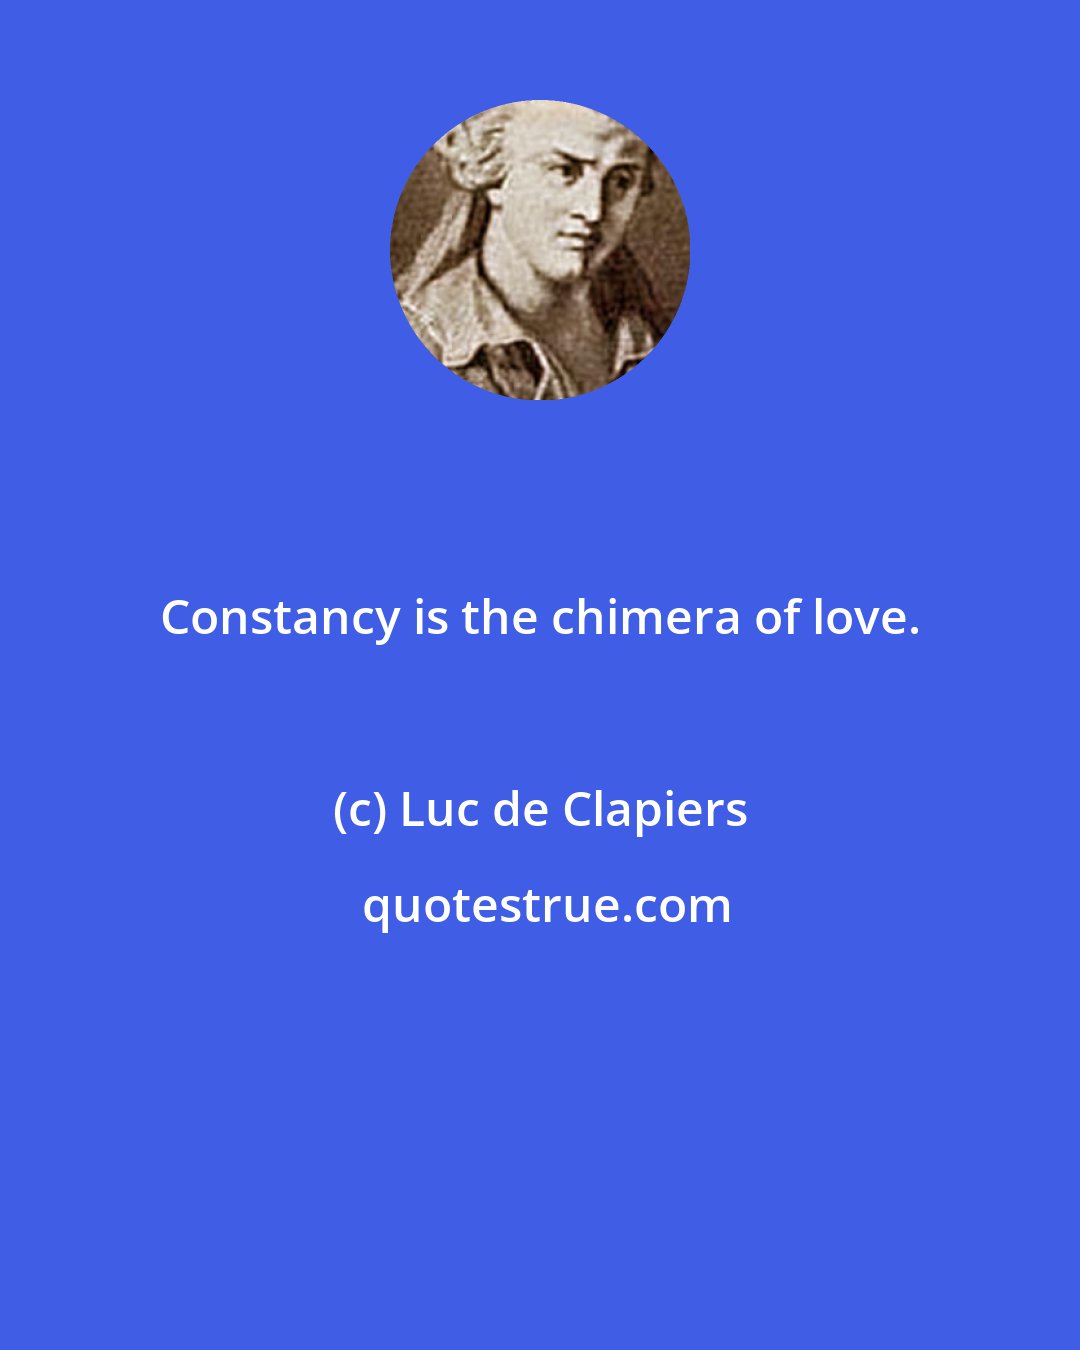 Luc de Clapiers: Constancy is the chimera of love.